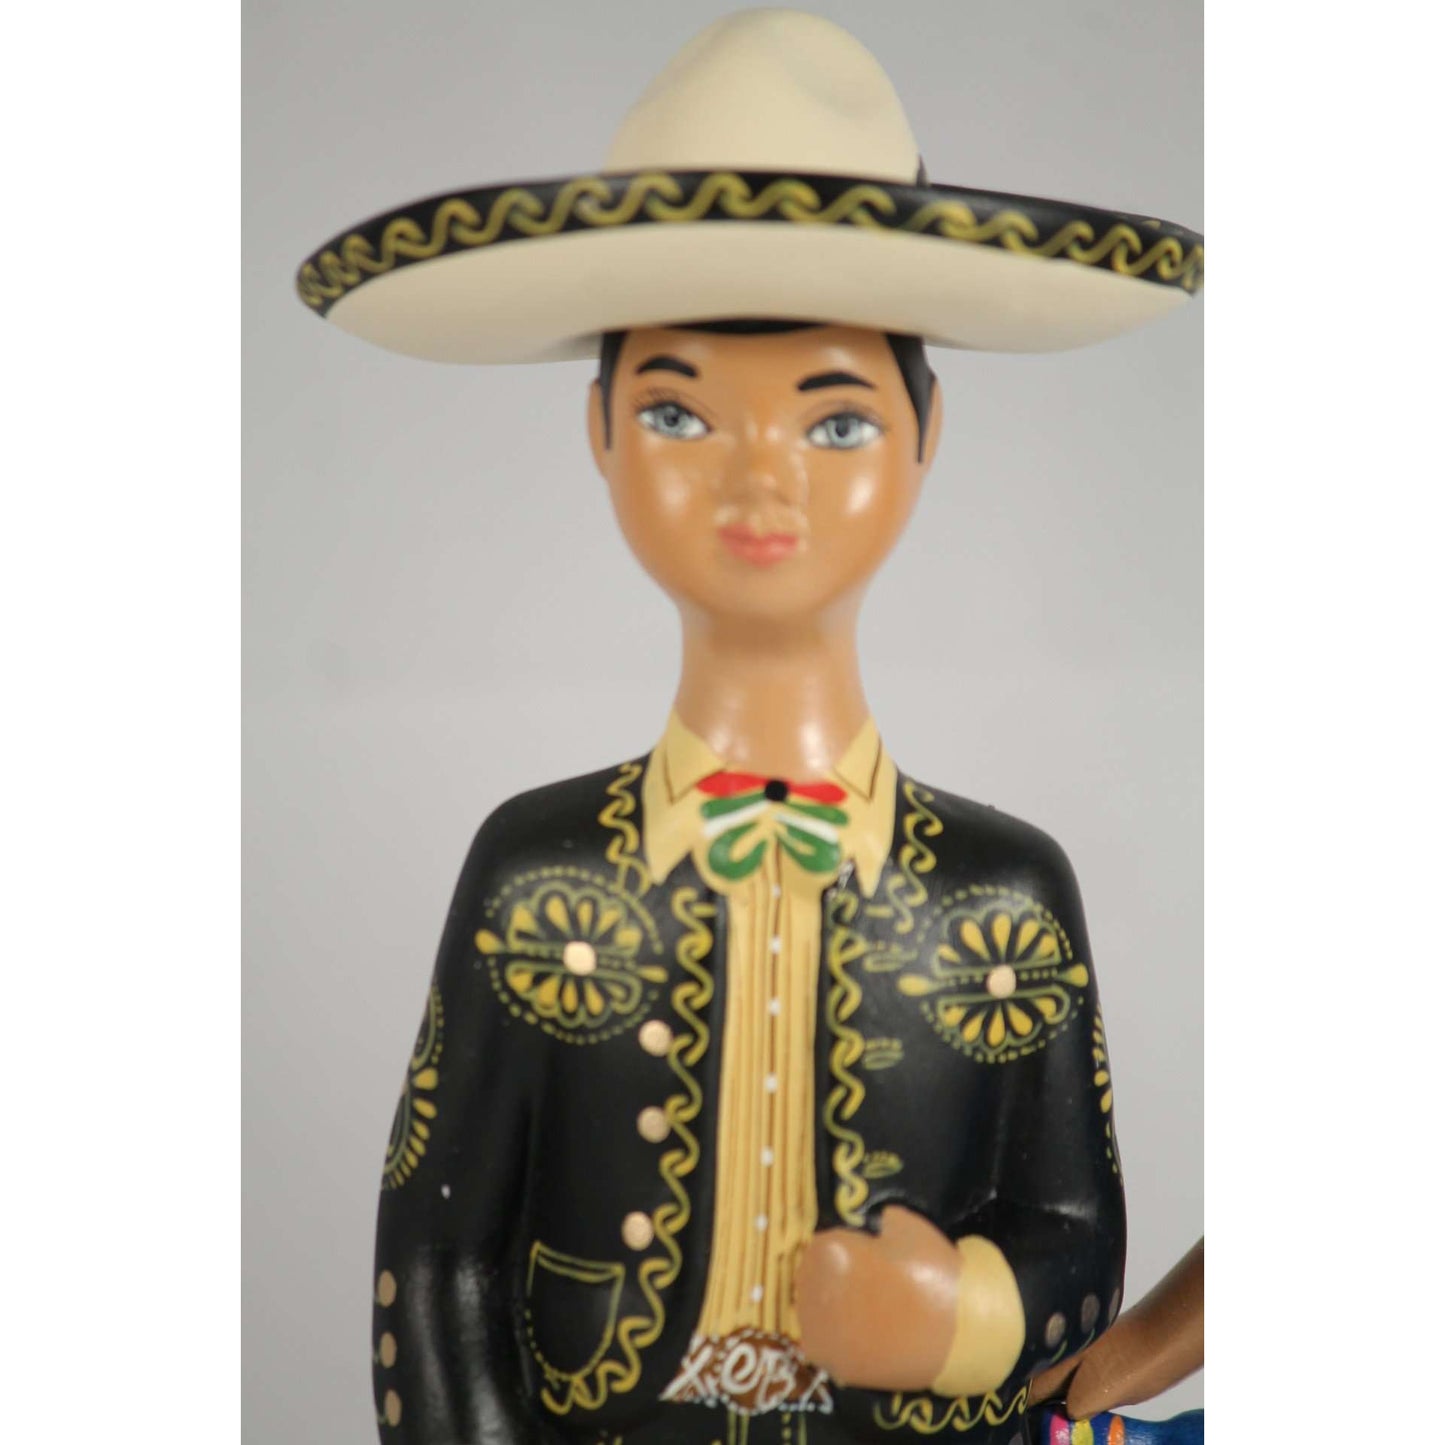 Lupita Najaco Ceramic Dolls Children Dancers Mexico Folk Art Black/Royal Blue